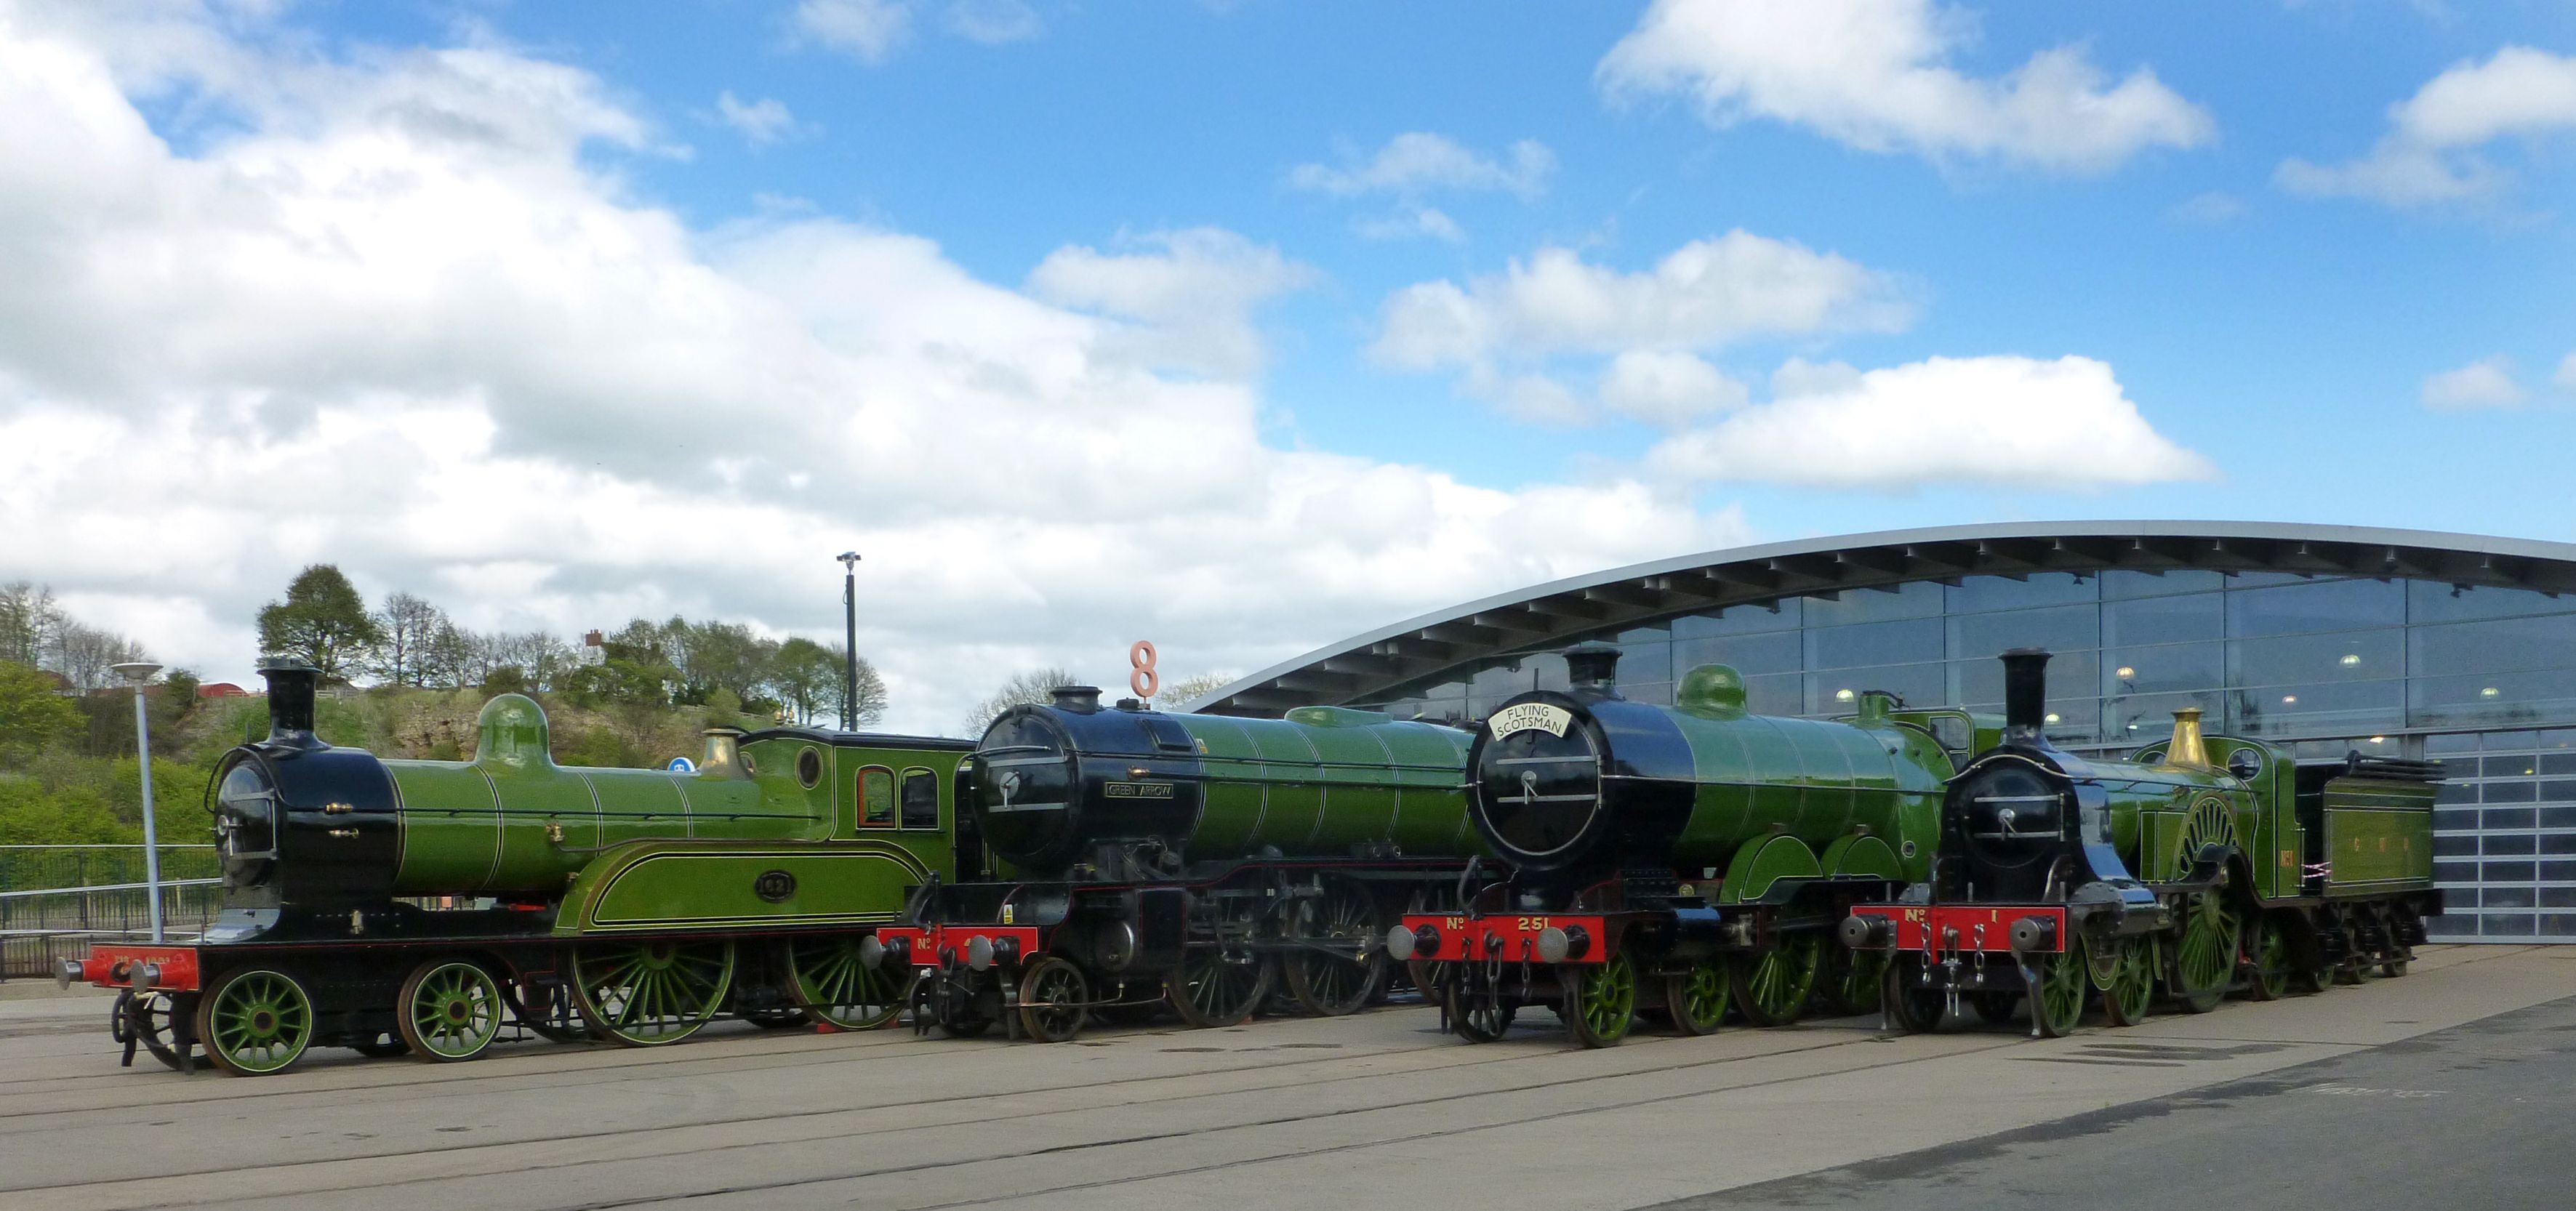 Railway Museum at Shilden, Yorkshire